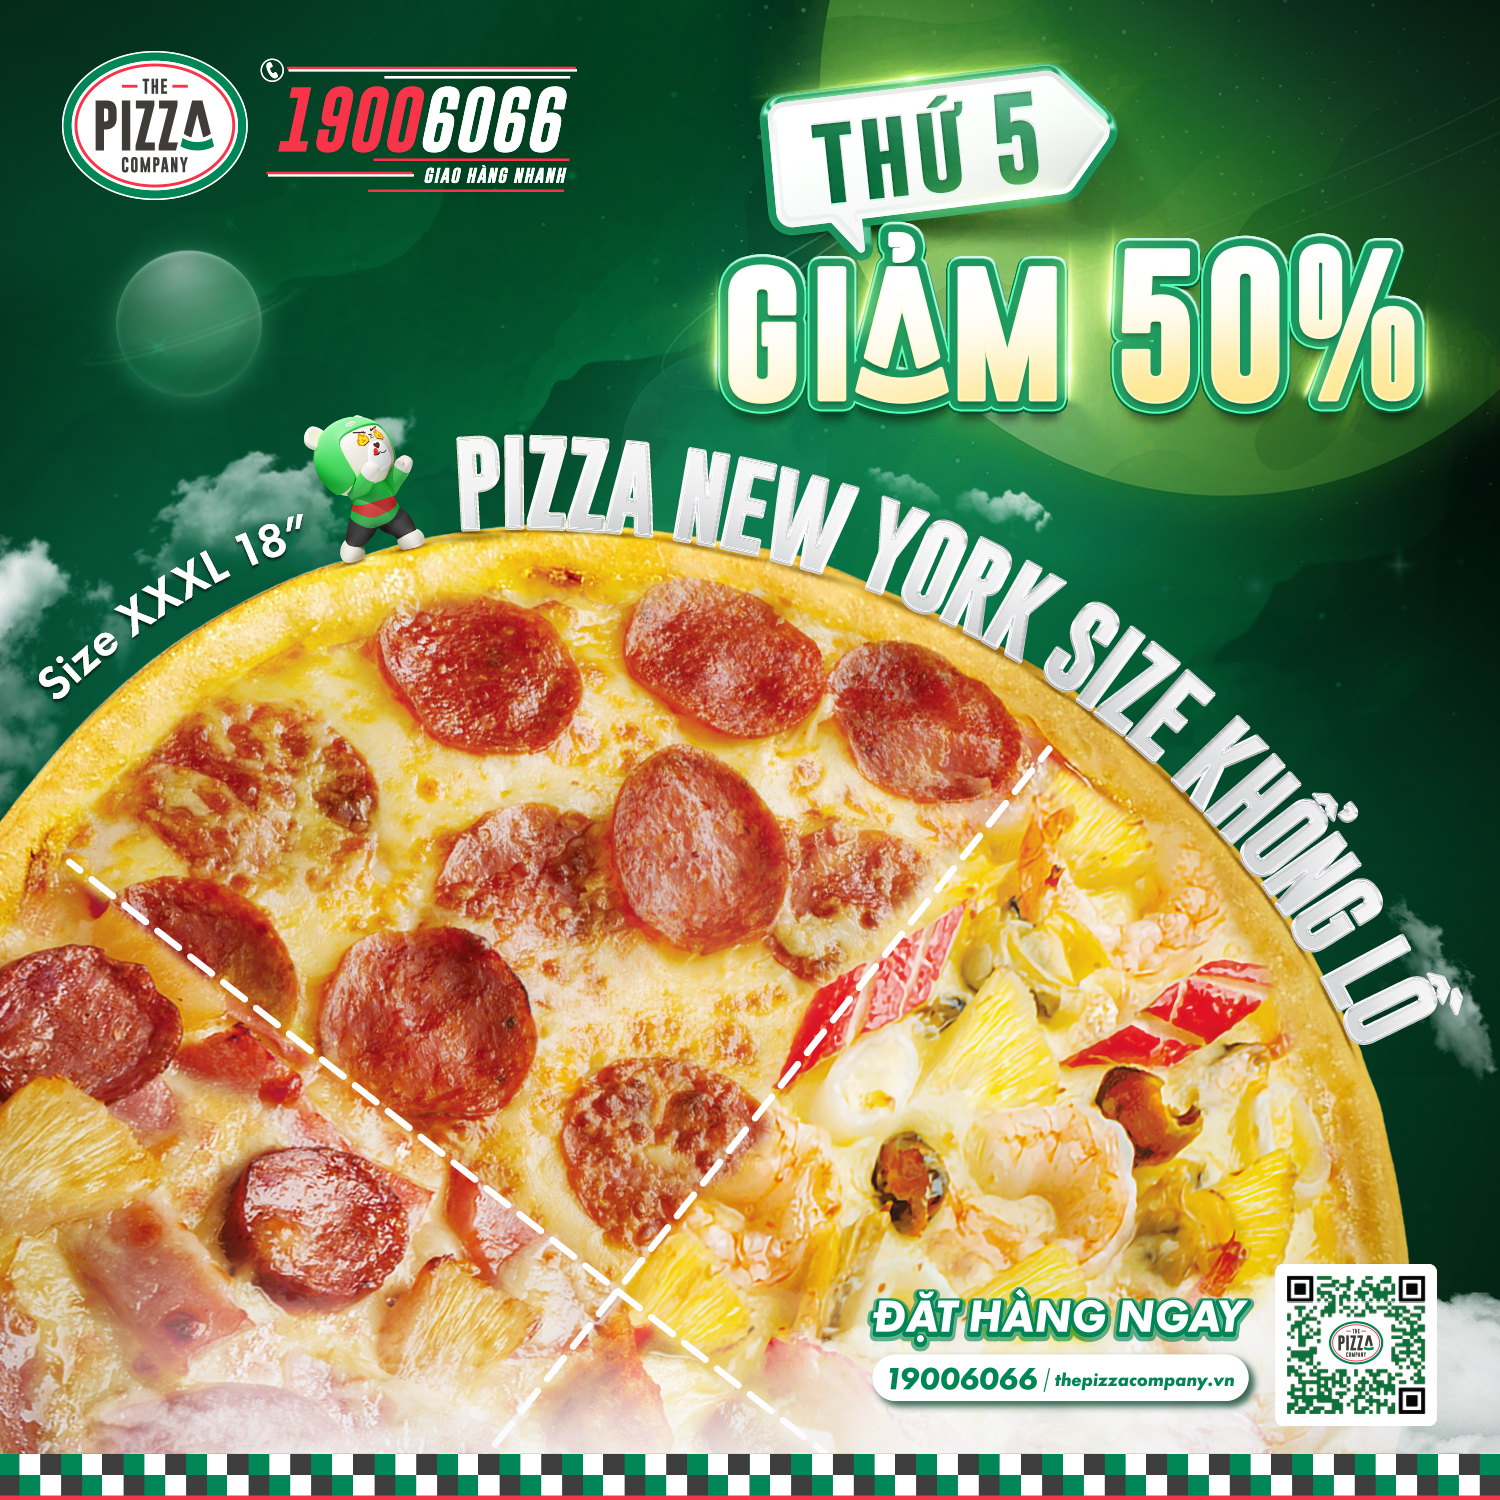 THỨ 5 - GIẢM 50% PIZZA NEW YORK SIZE KHỔNG LỒ